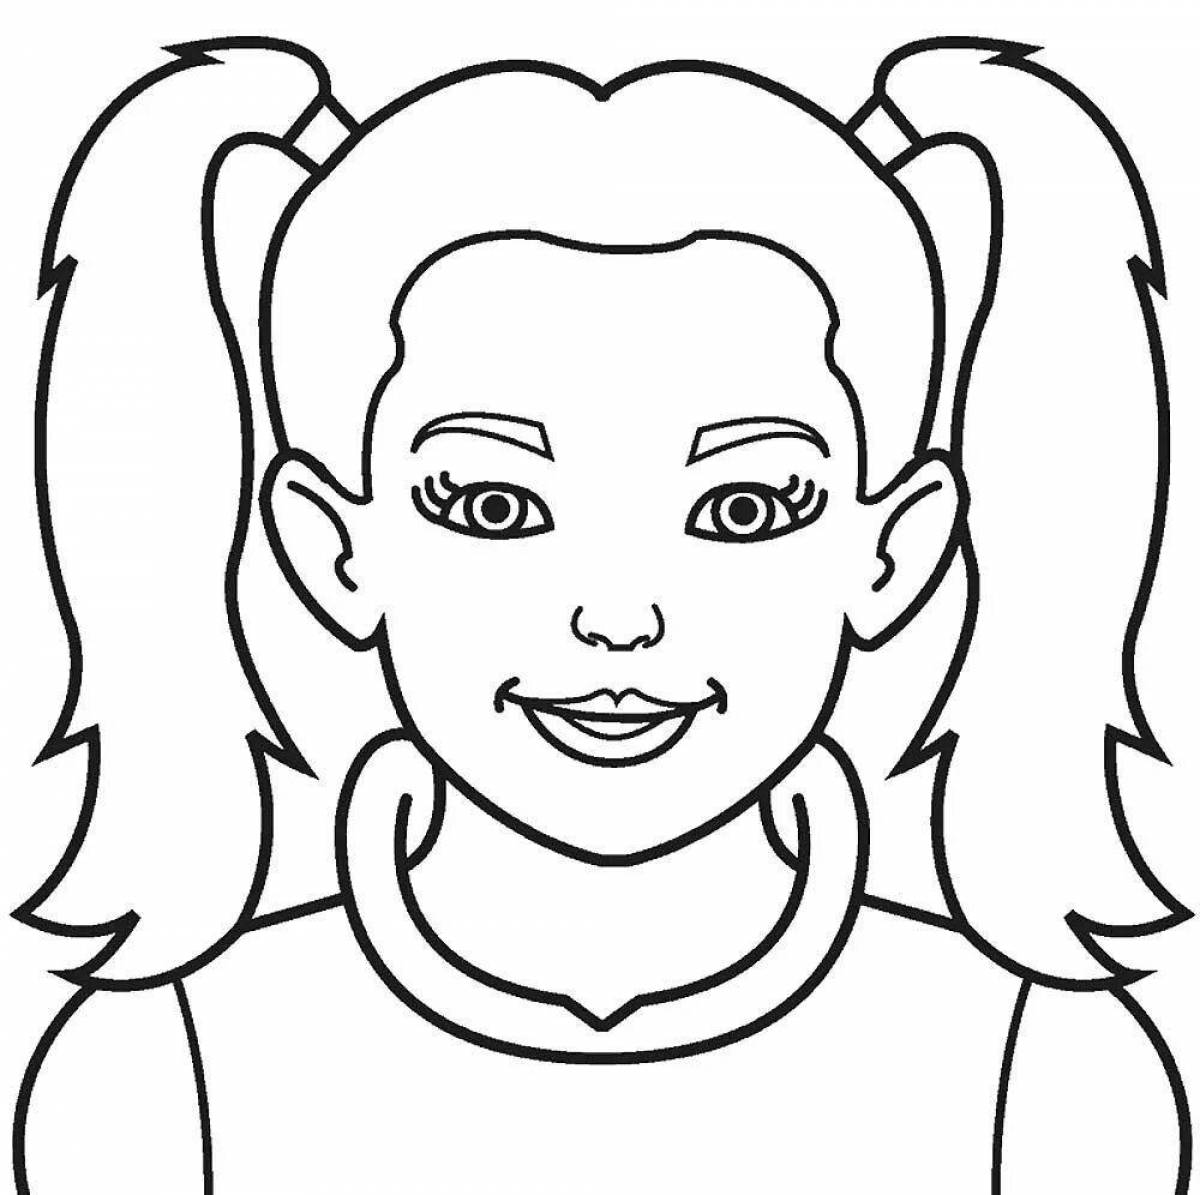 Playful girl face coloring